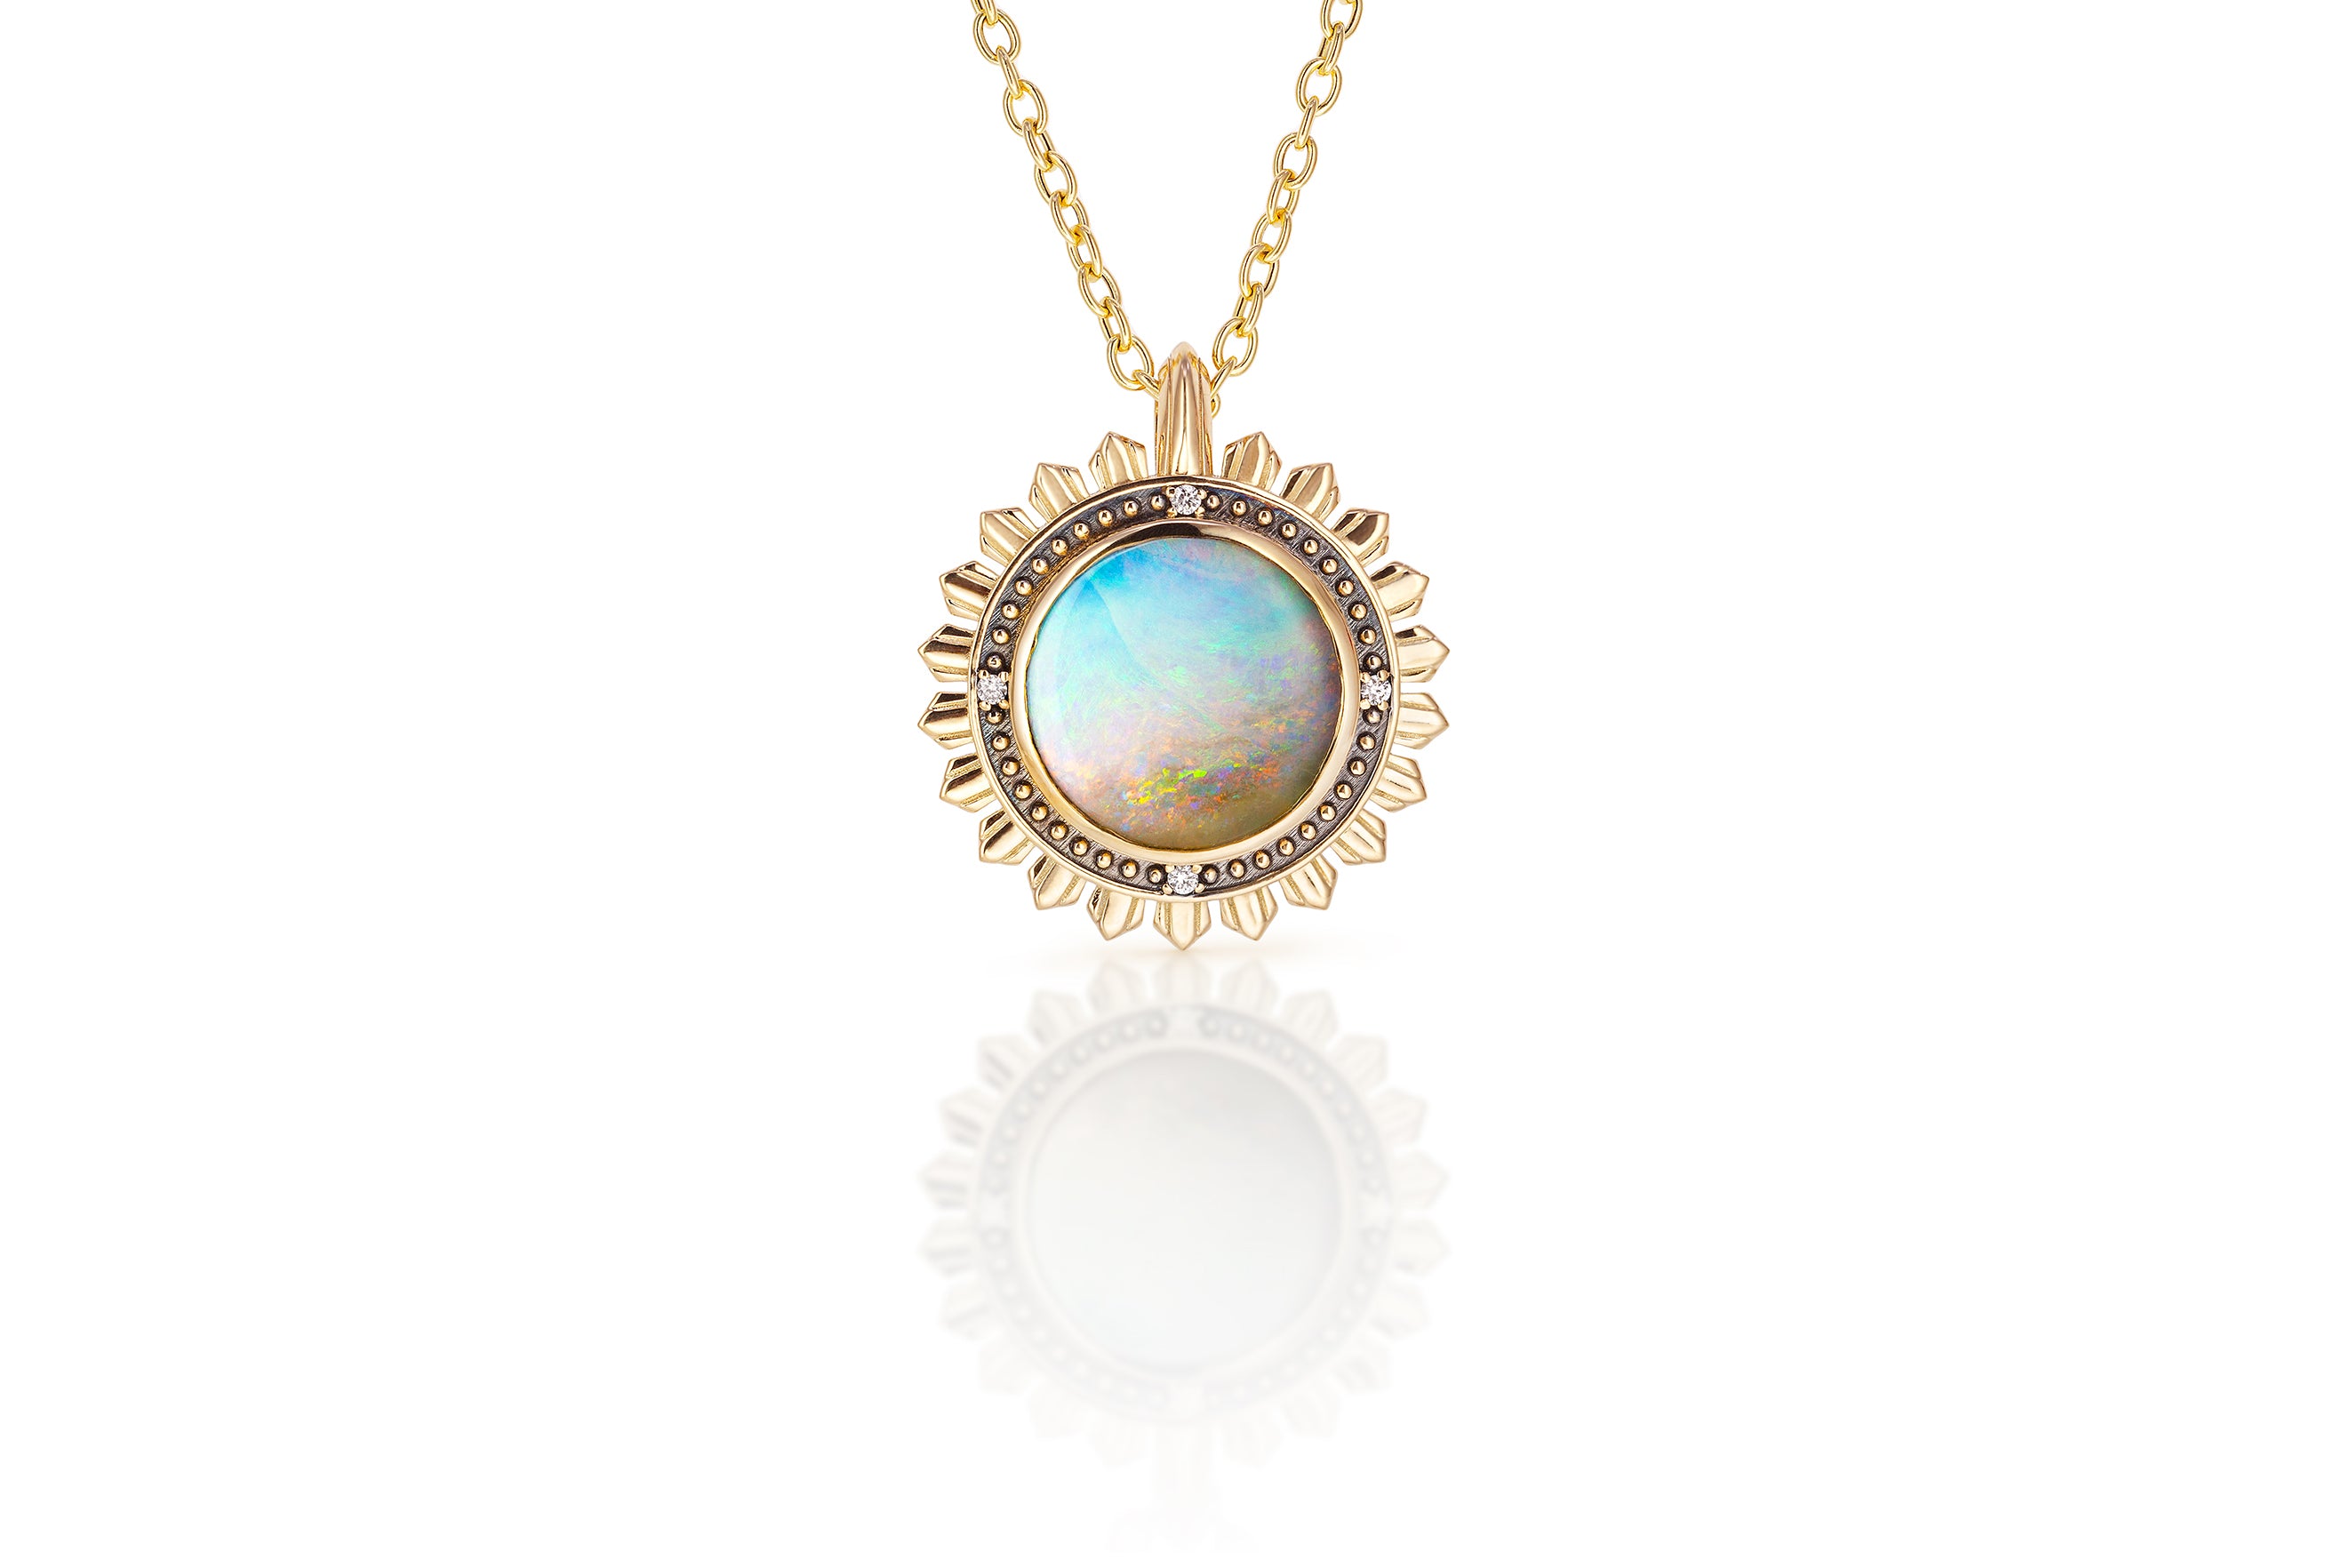 Sun Coin Necklace Pendant Fiore Wylde Opal Beaded  